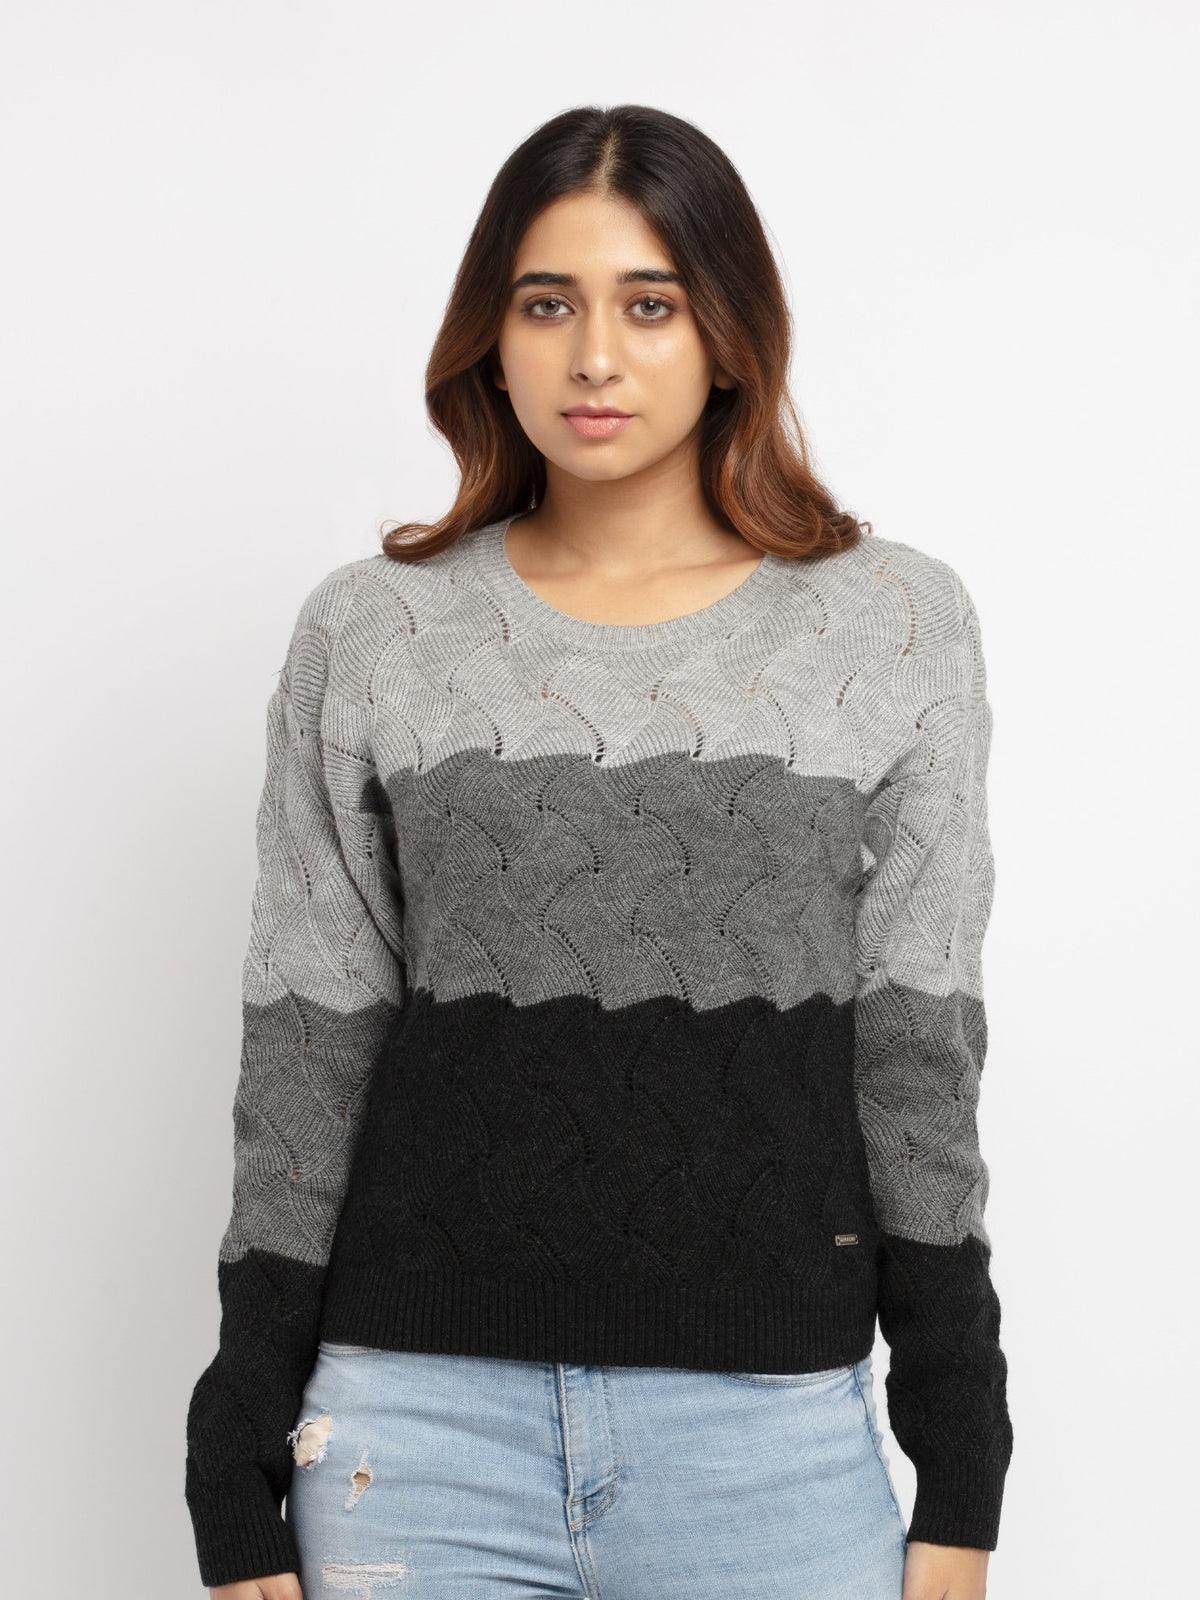 stylish sweater for women